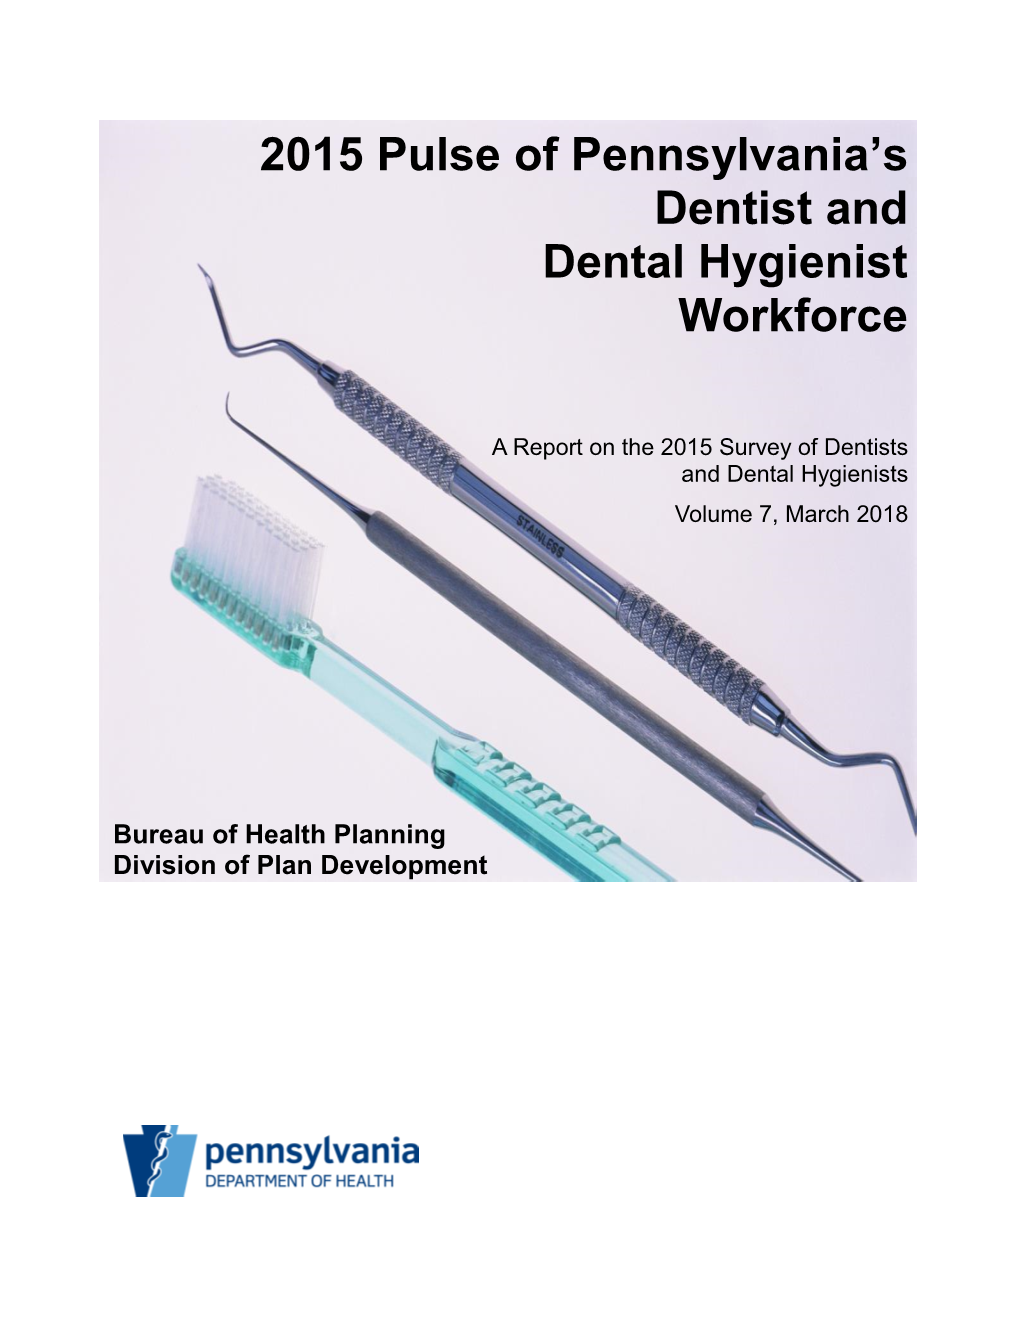 2015 Pulse of Pennsylvania's Dentist and Dental Hygienist Workforce